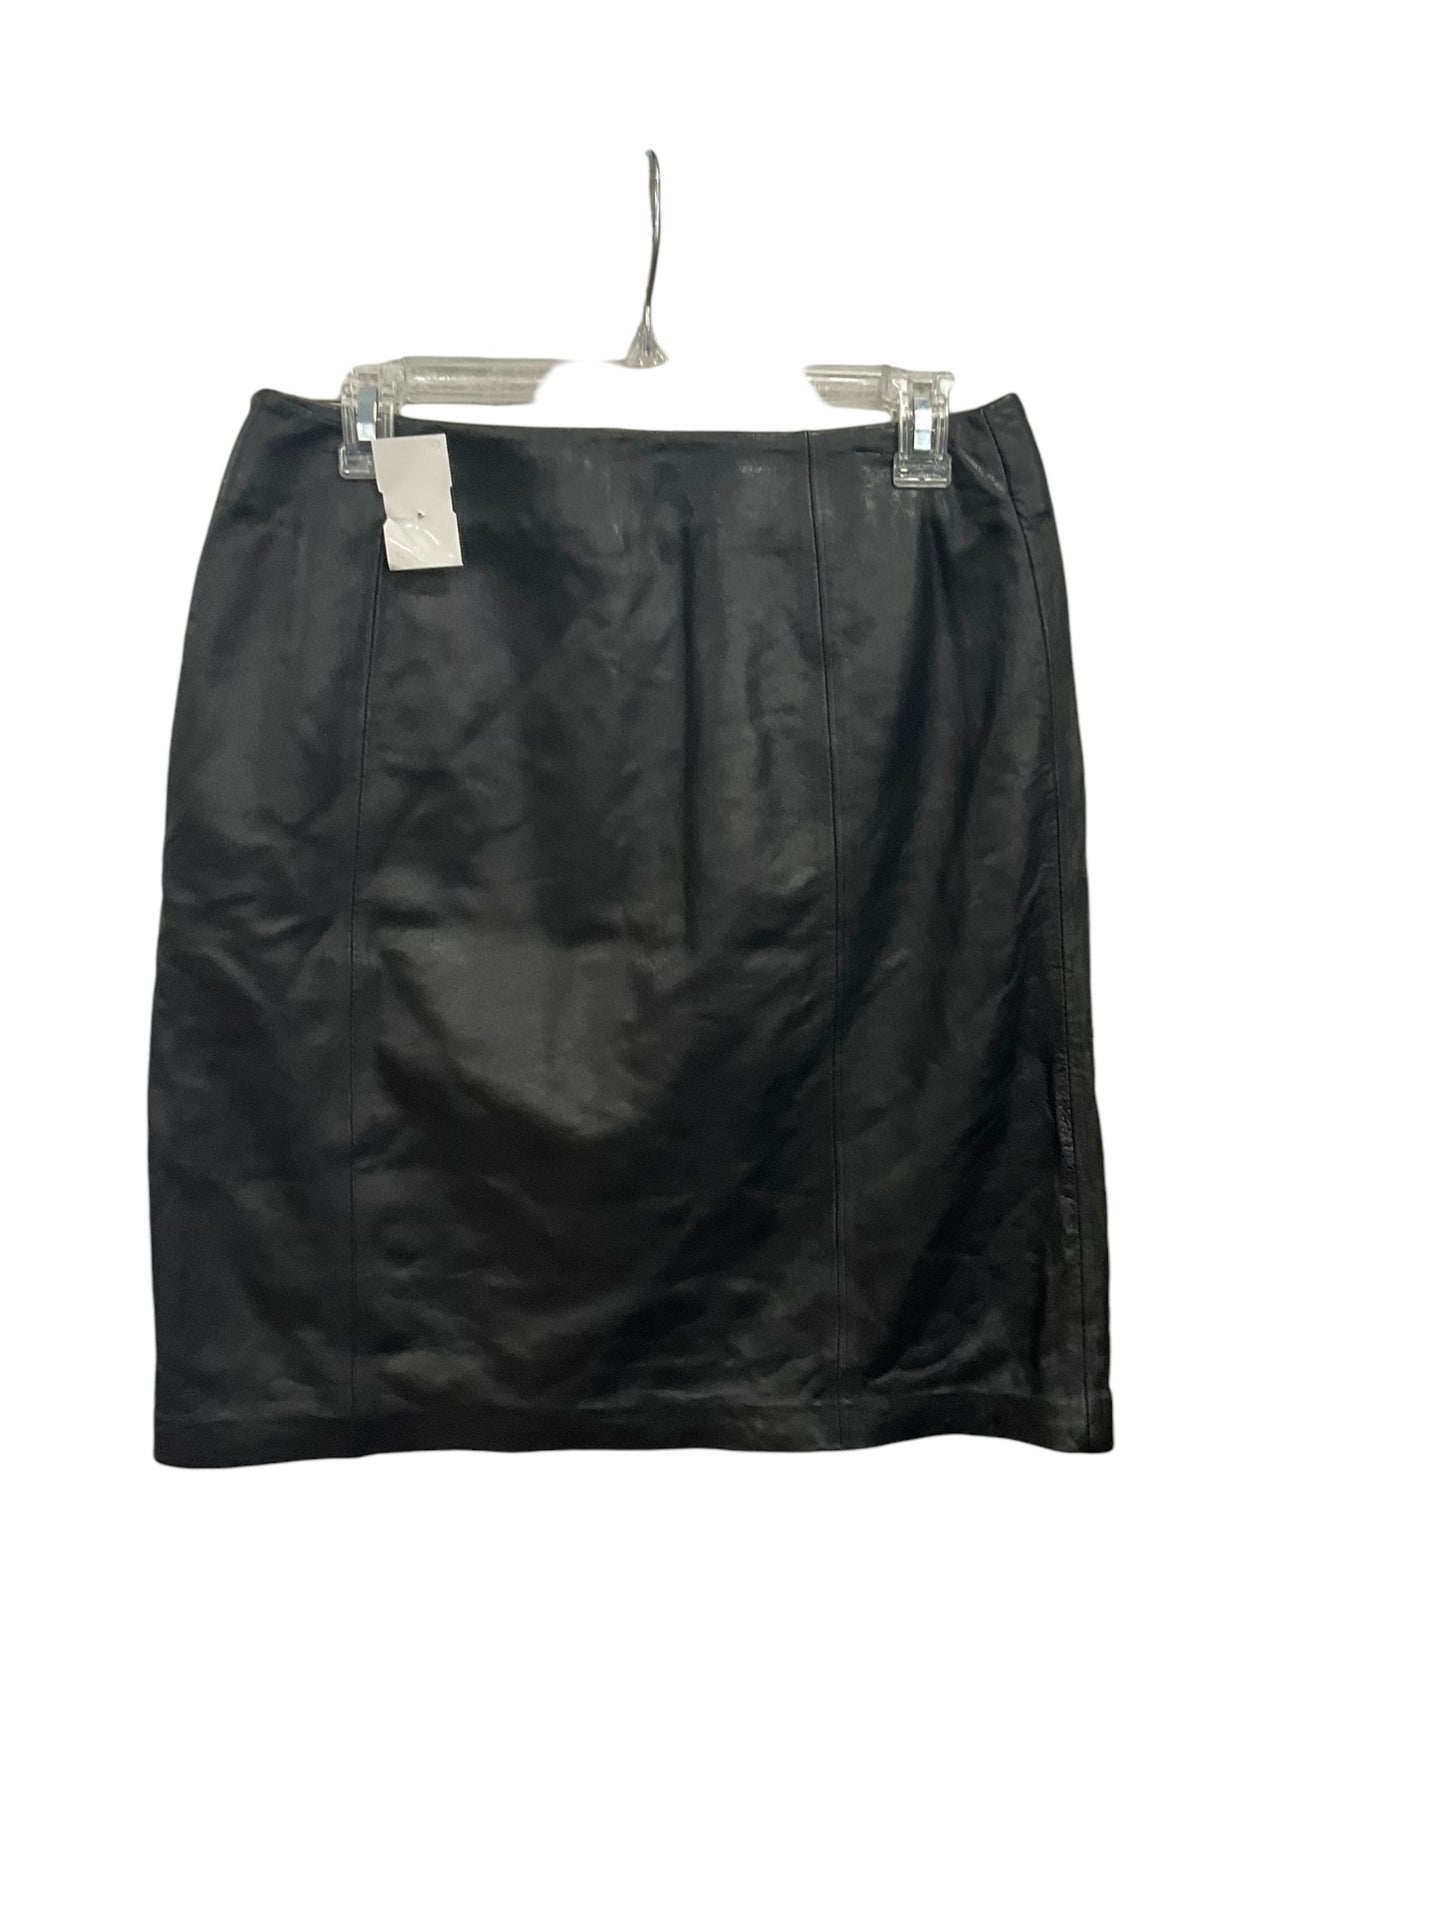 Skirt Midi By Alfani  Size: 8